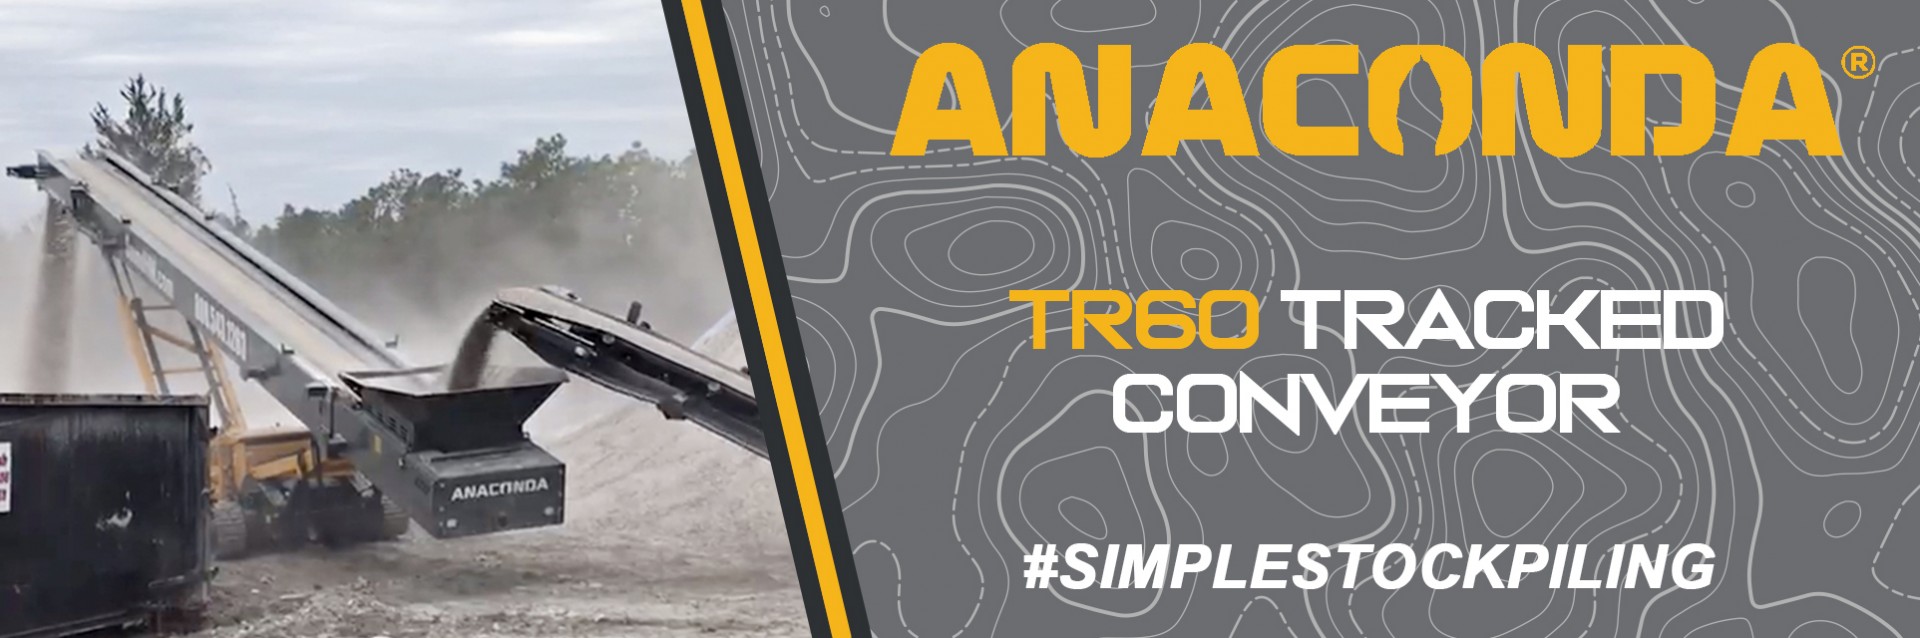 Anaconda TR60 Tracked Conveyor